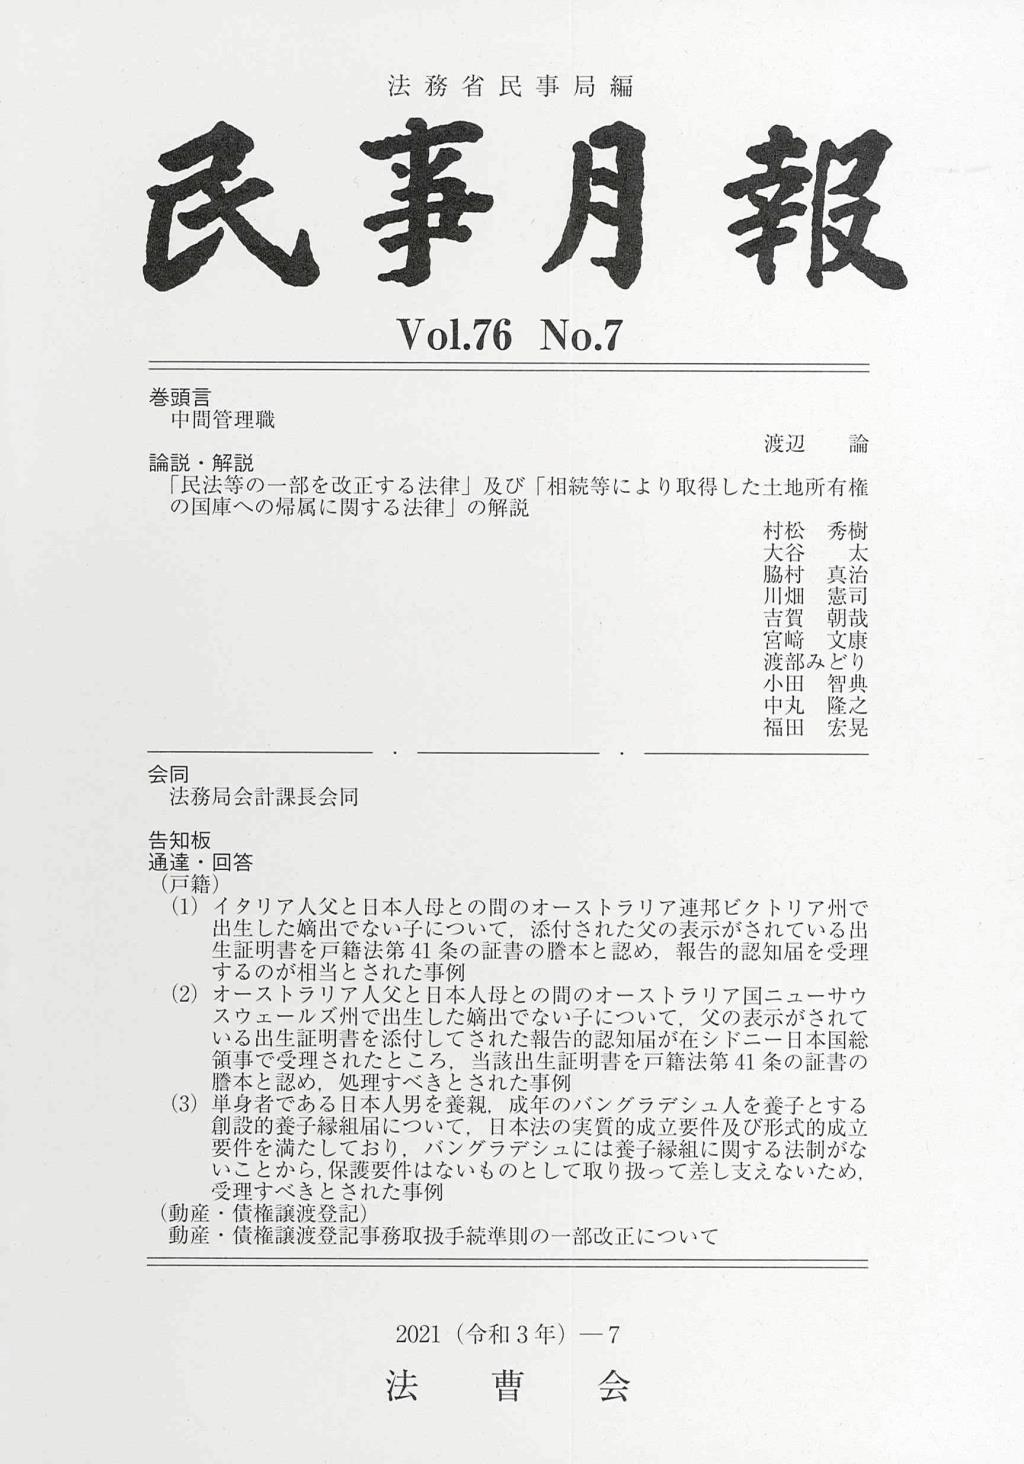 民事月報 Vol.76 No.7（2021-7）